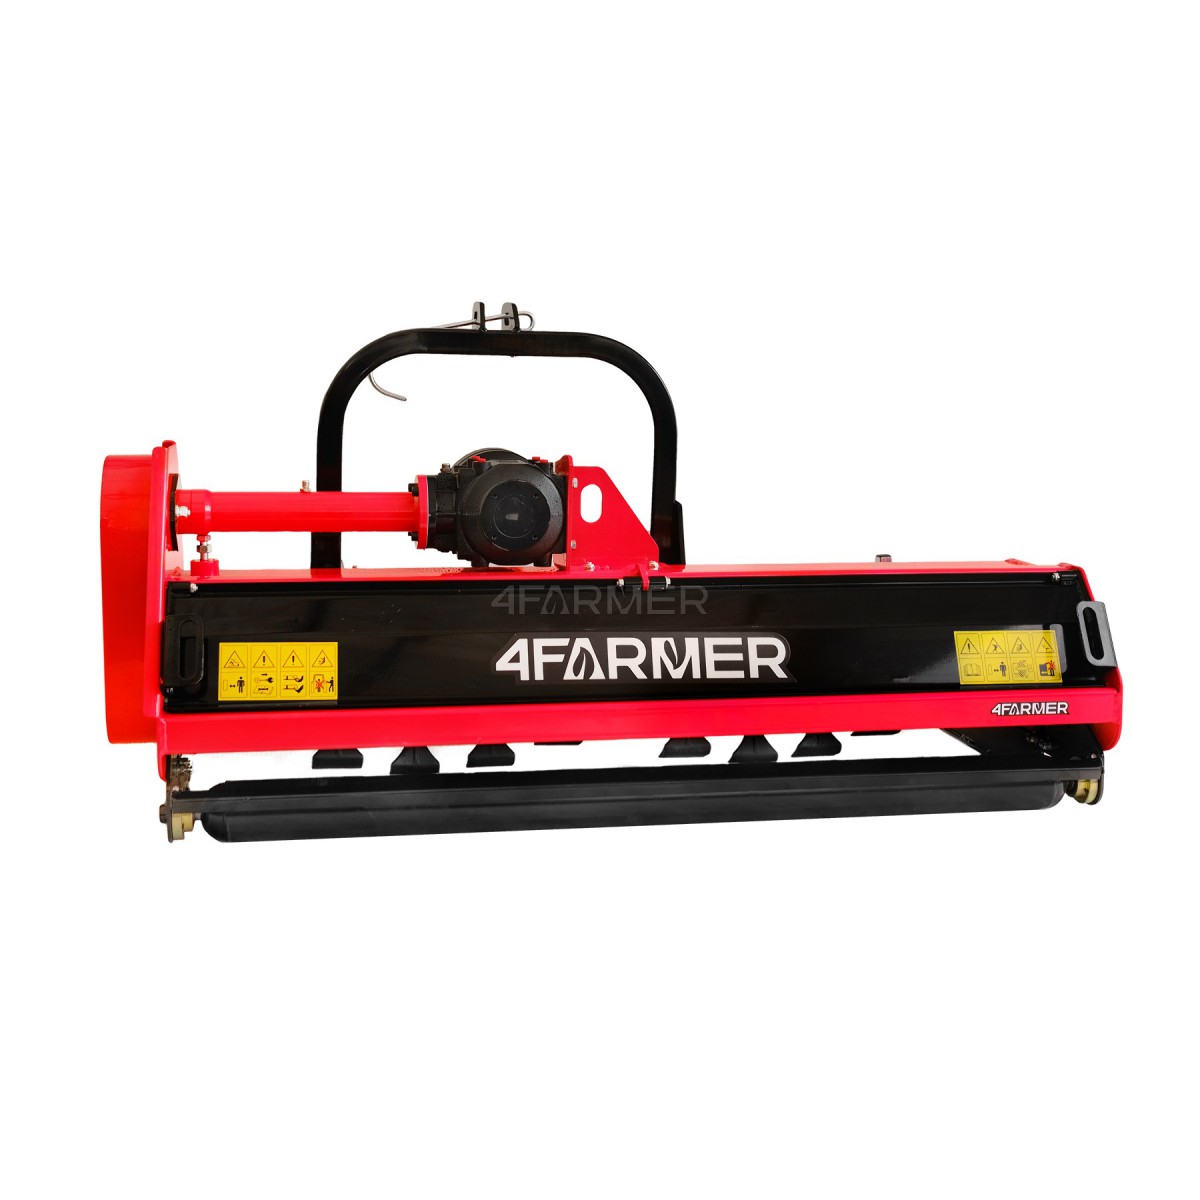 EFGC 155D 4FARMER flail mower - red